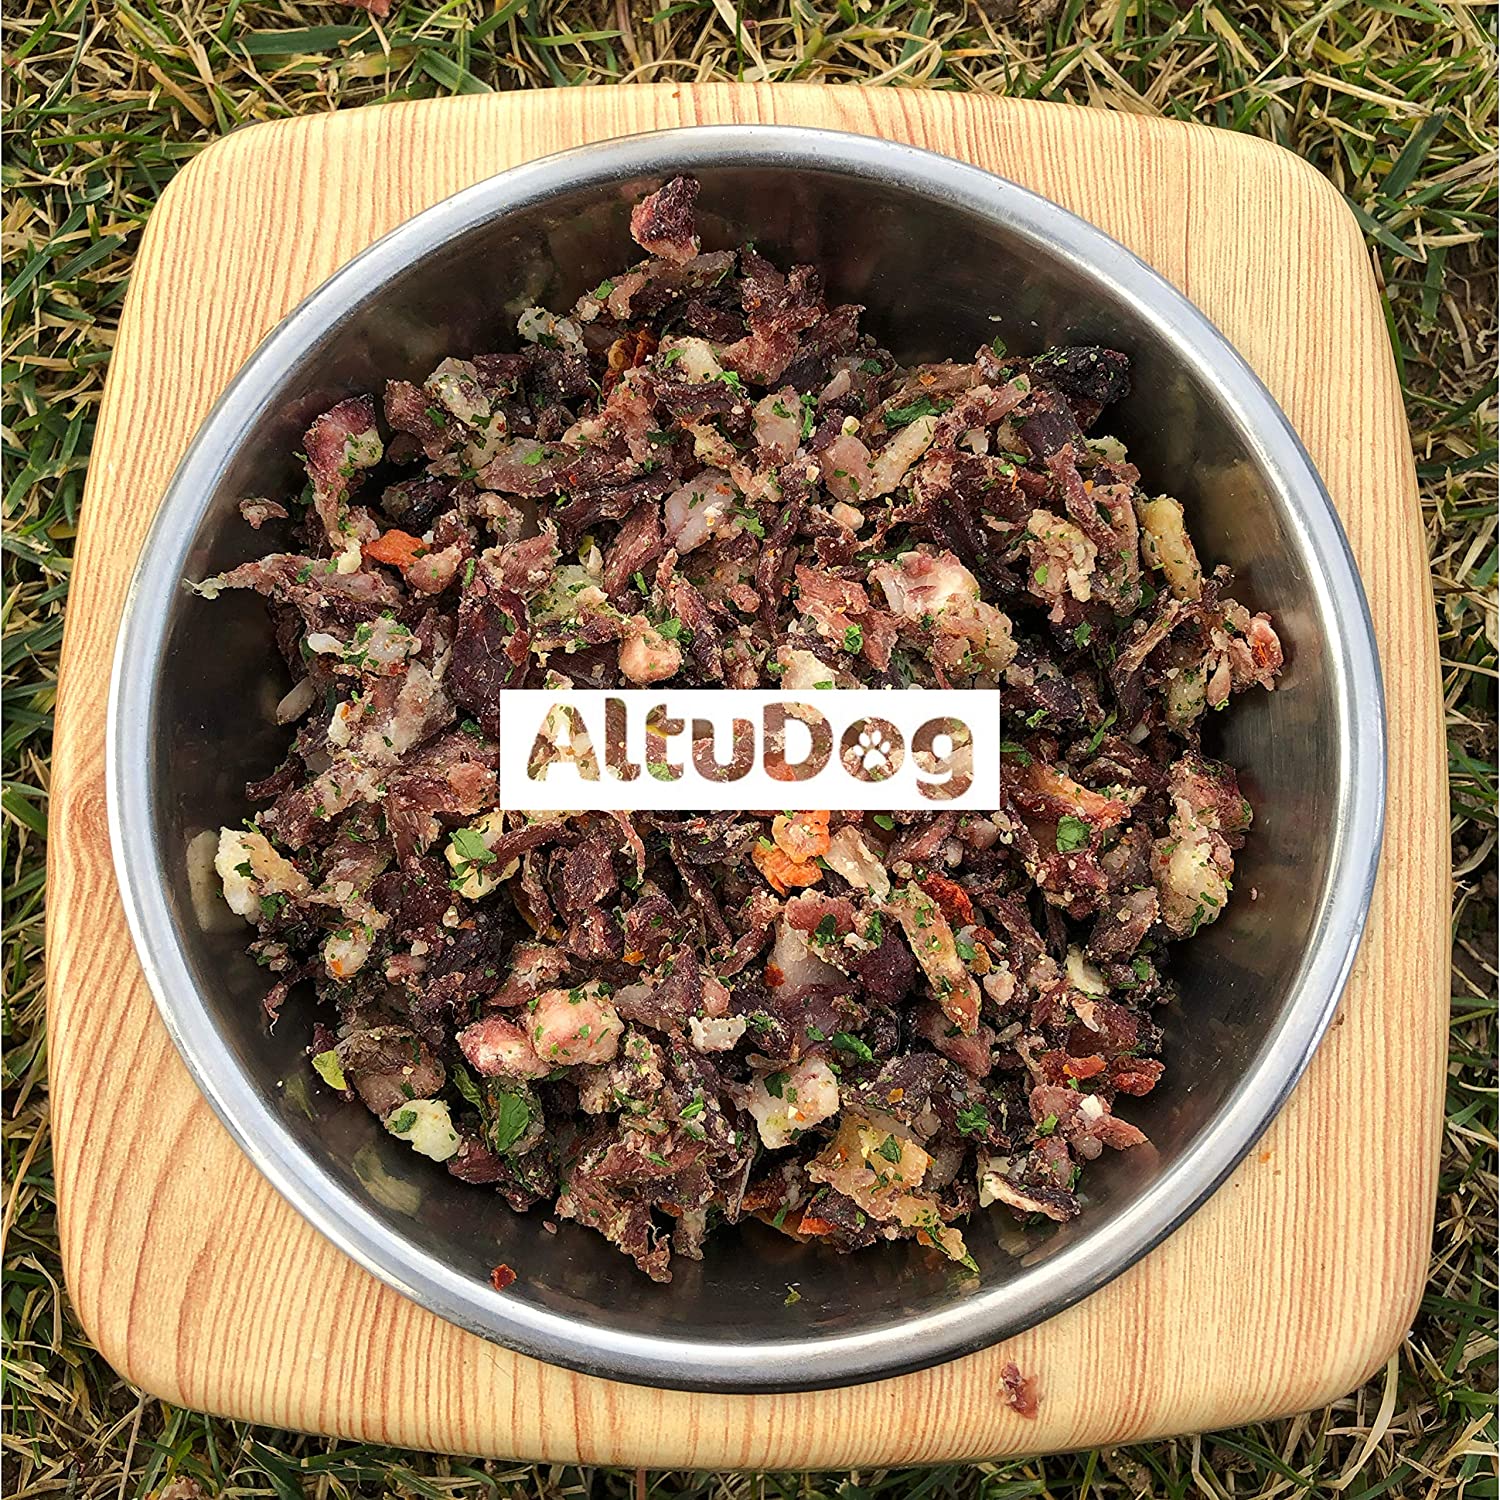  ALTUDOG Alimento Natural deshidratado para Cachorros Wagyu SIN Cereales Puppy 500g - Comida Natural para Perros (500g) 